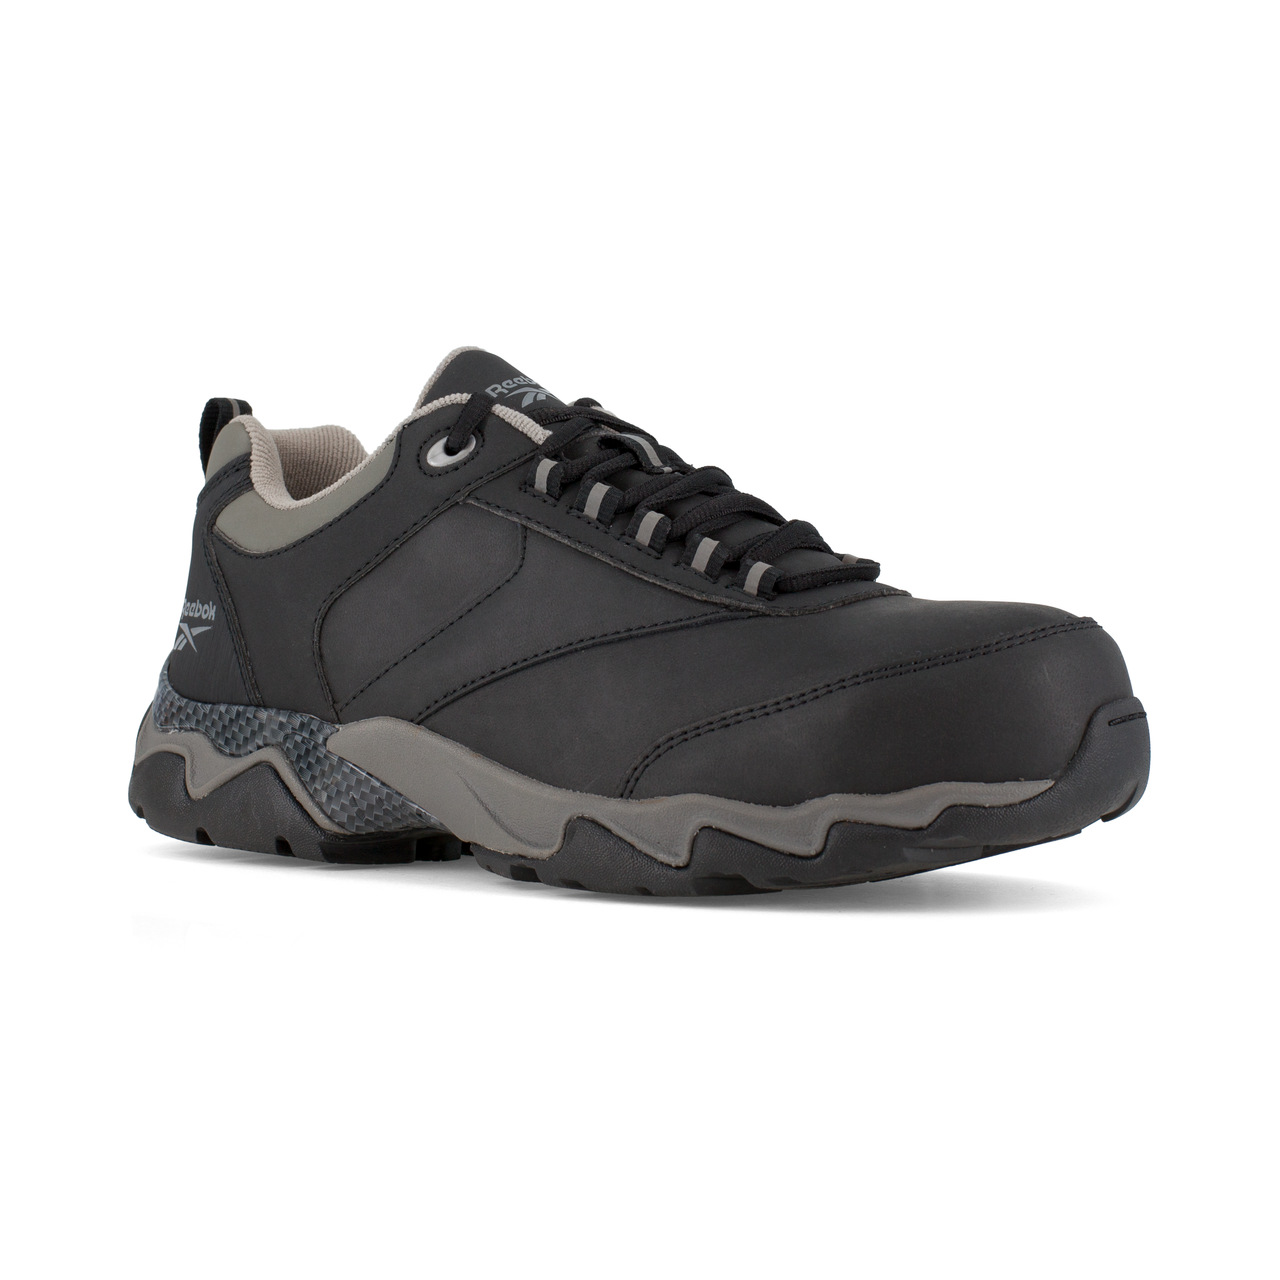 Beamer - RB1062 - Men's Seamless Sneakers - Safety Toe - Reebok Work